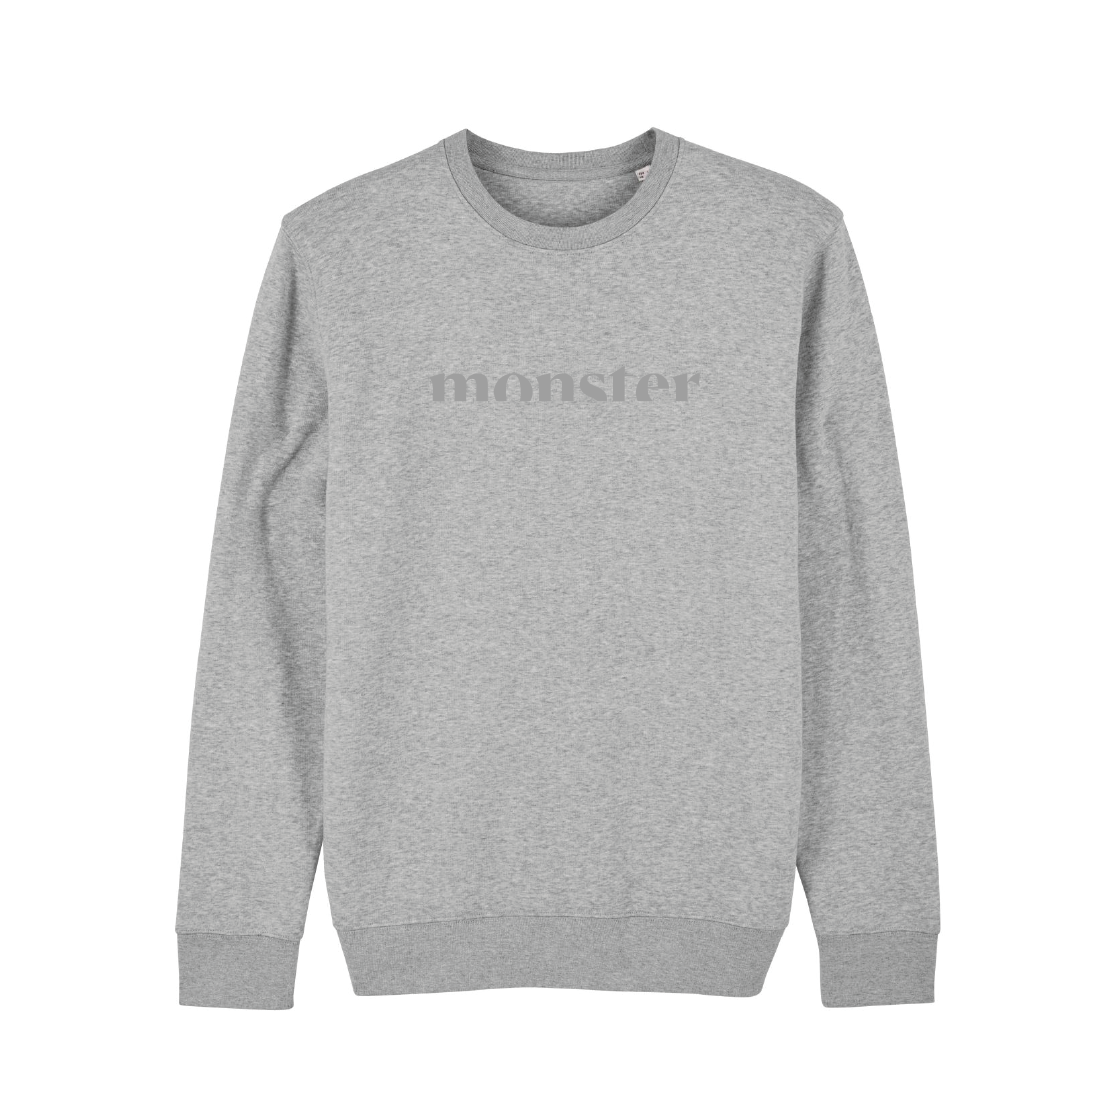 Sweatshirt Monster Heather grey